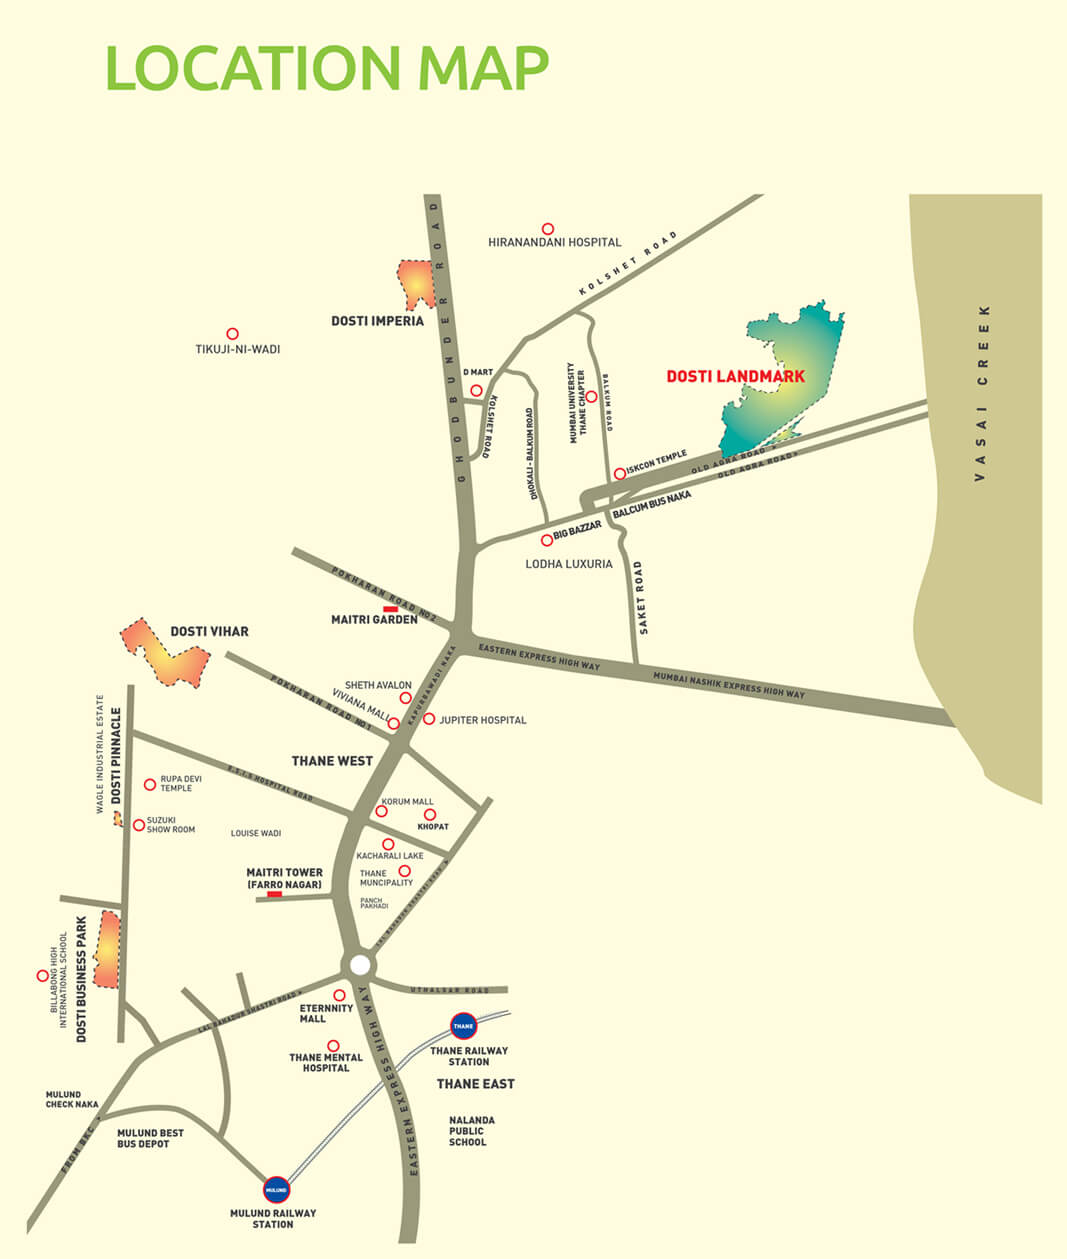 Dosti Landmark Location Map